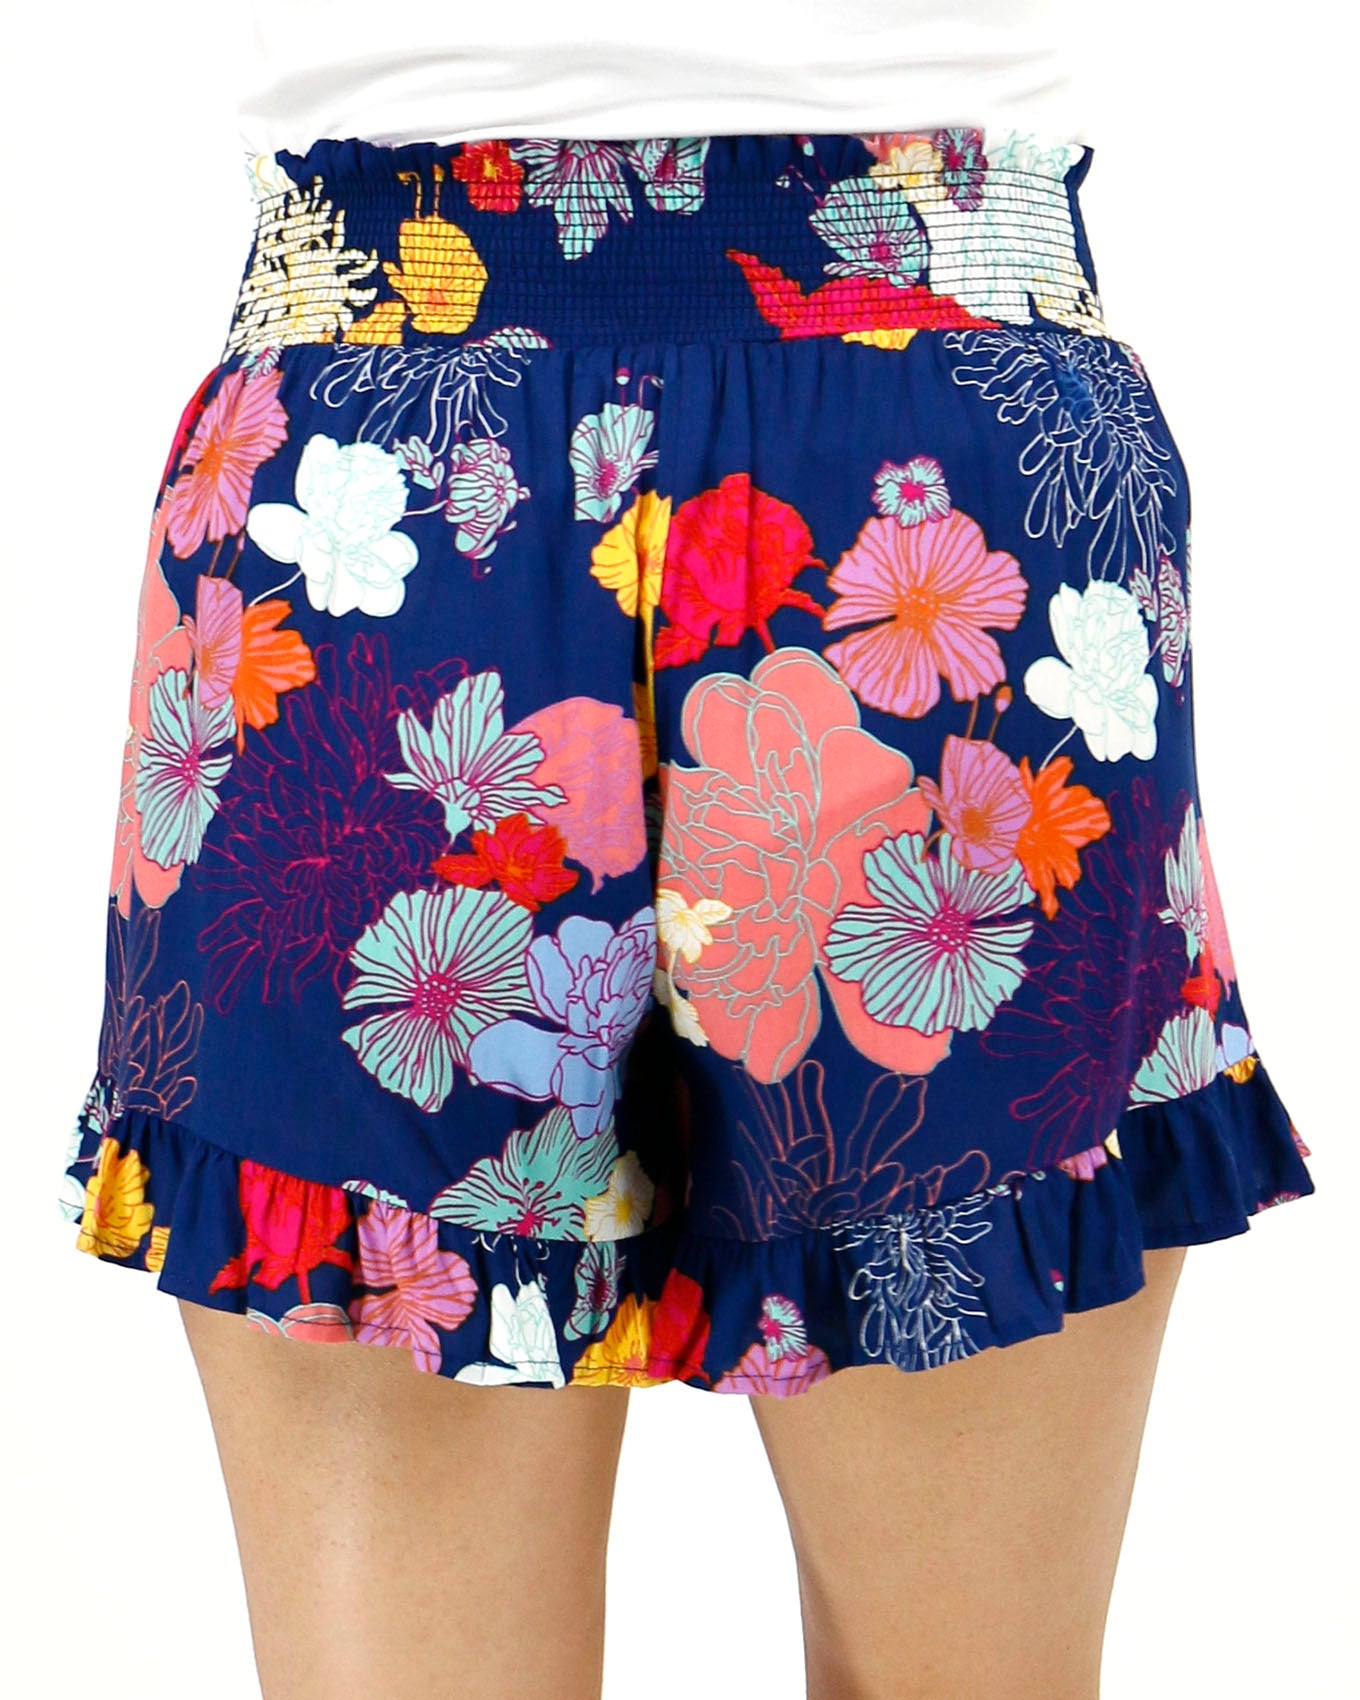 Back view stock shot of sketched floral smocked shorts